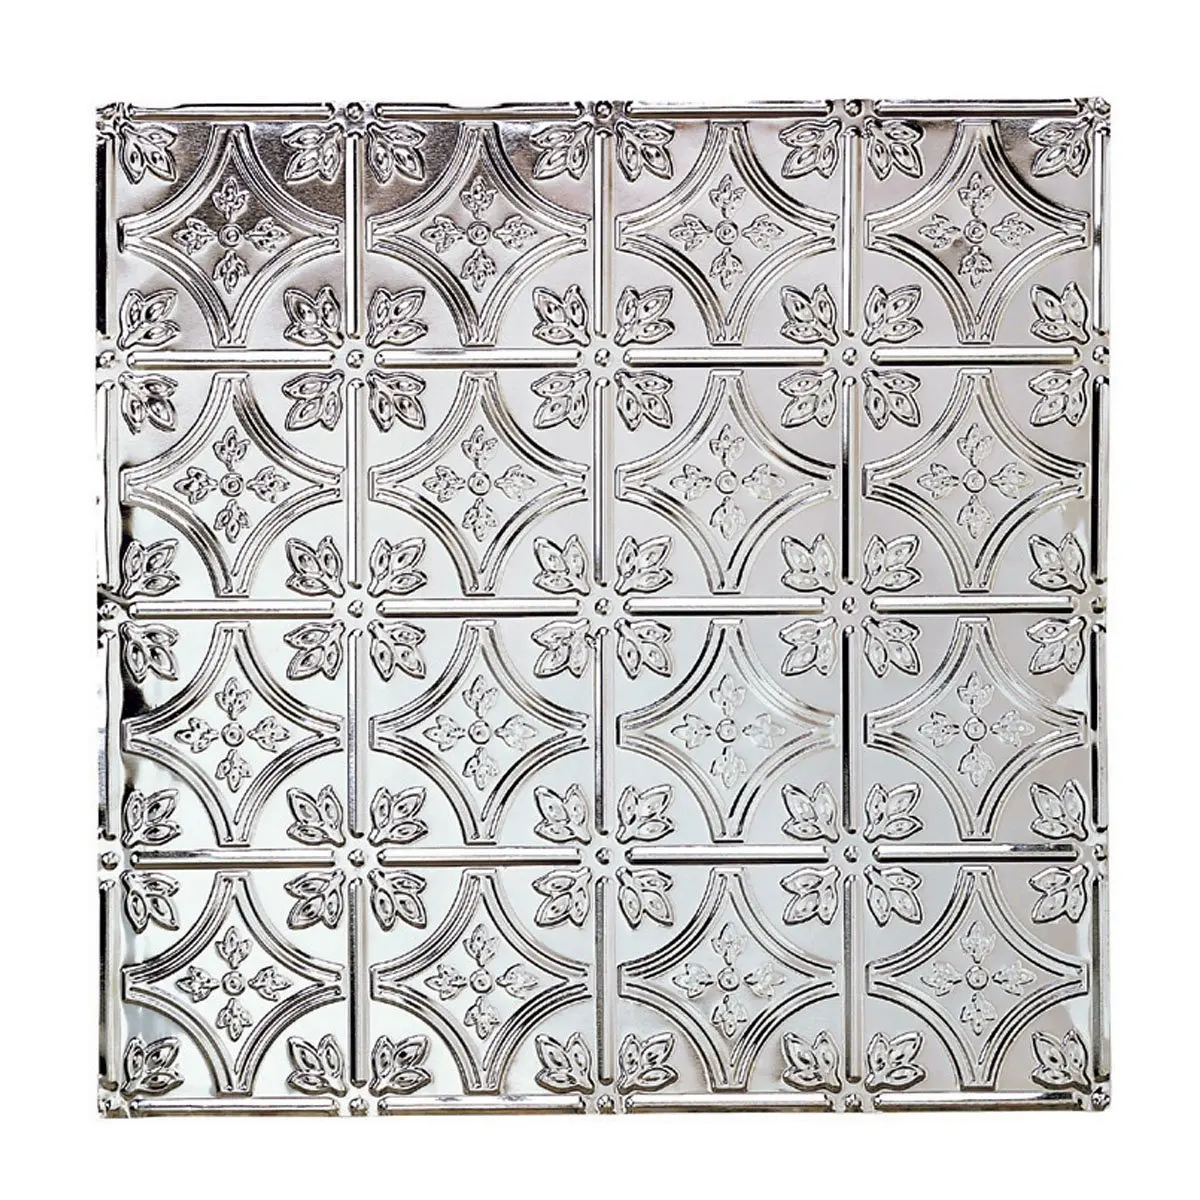 Cheap Tin Ceiling Tile Backsplash Find Tin Ceiling Tile